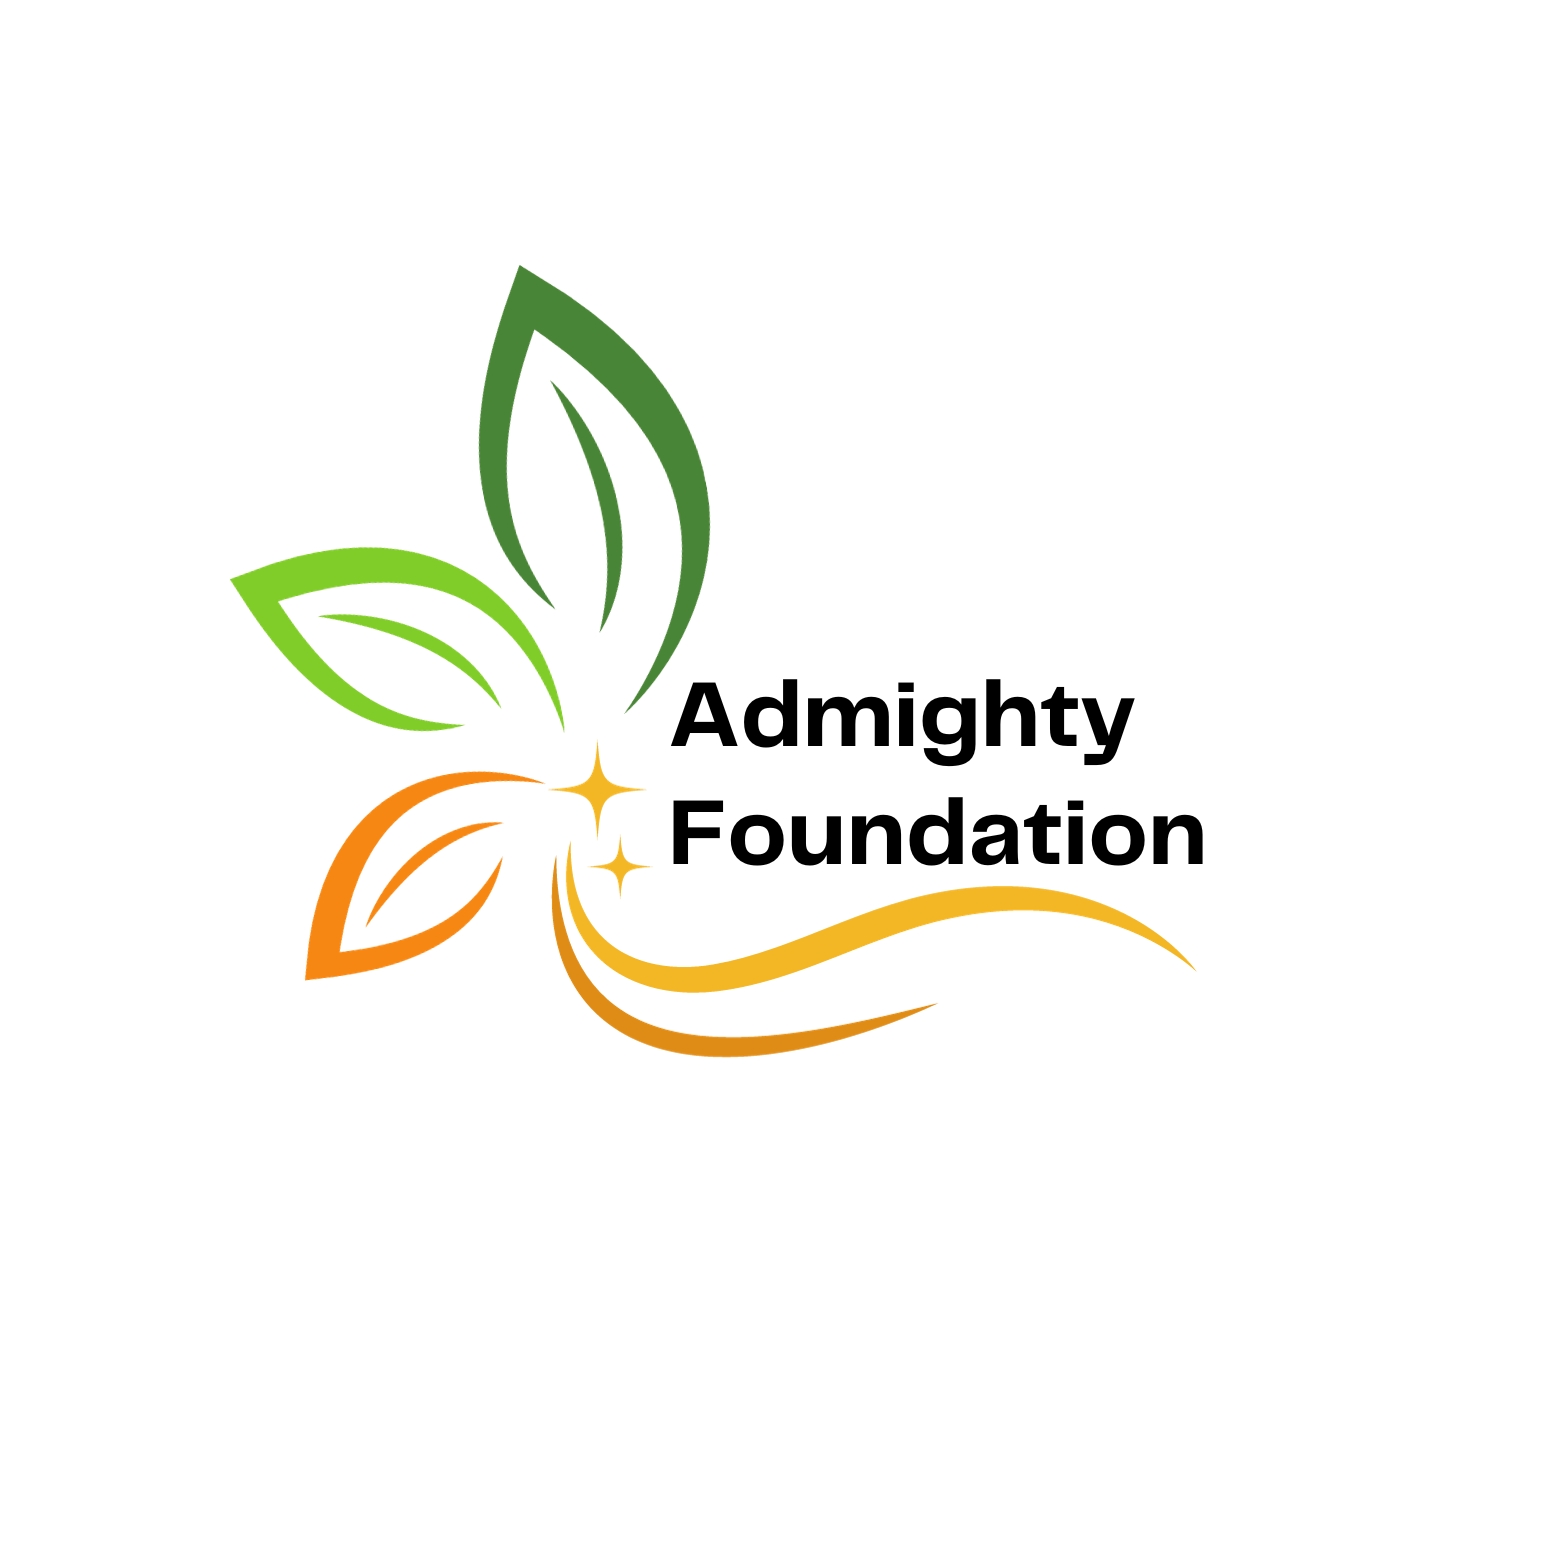 Admighty Foundation